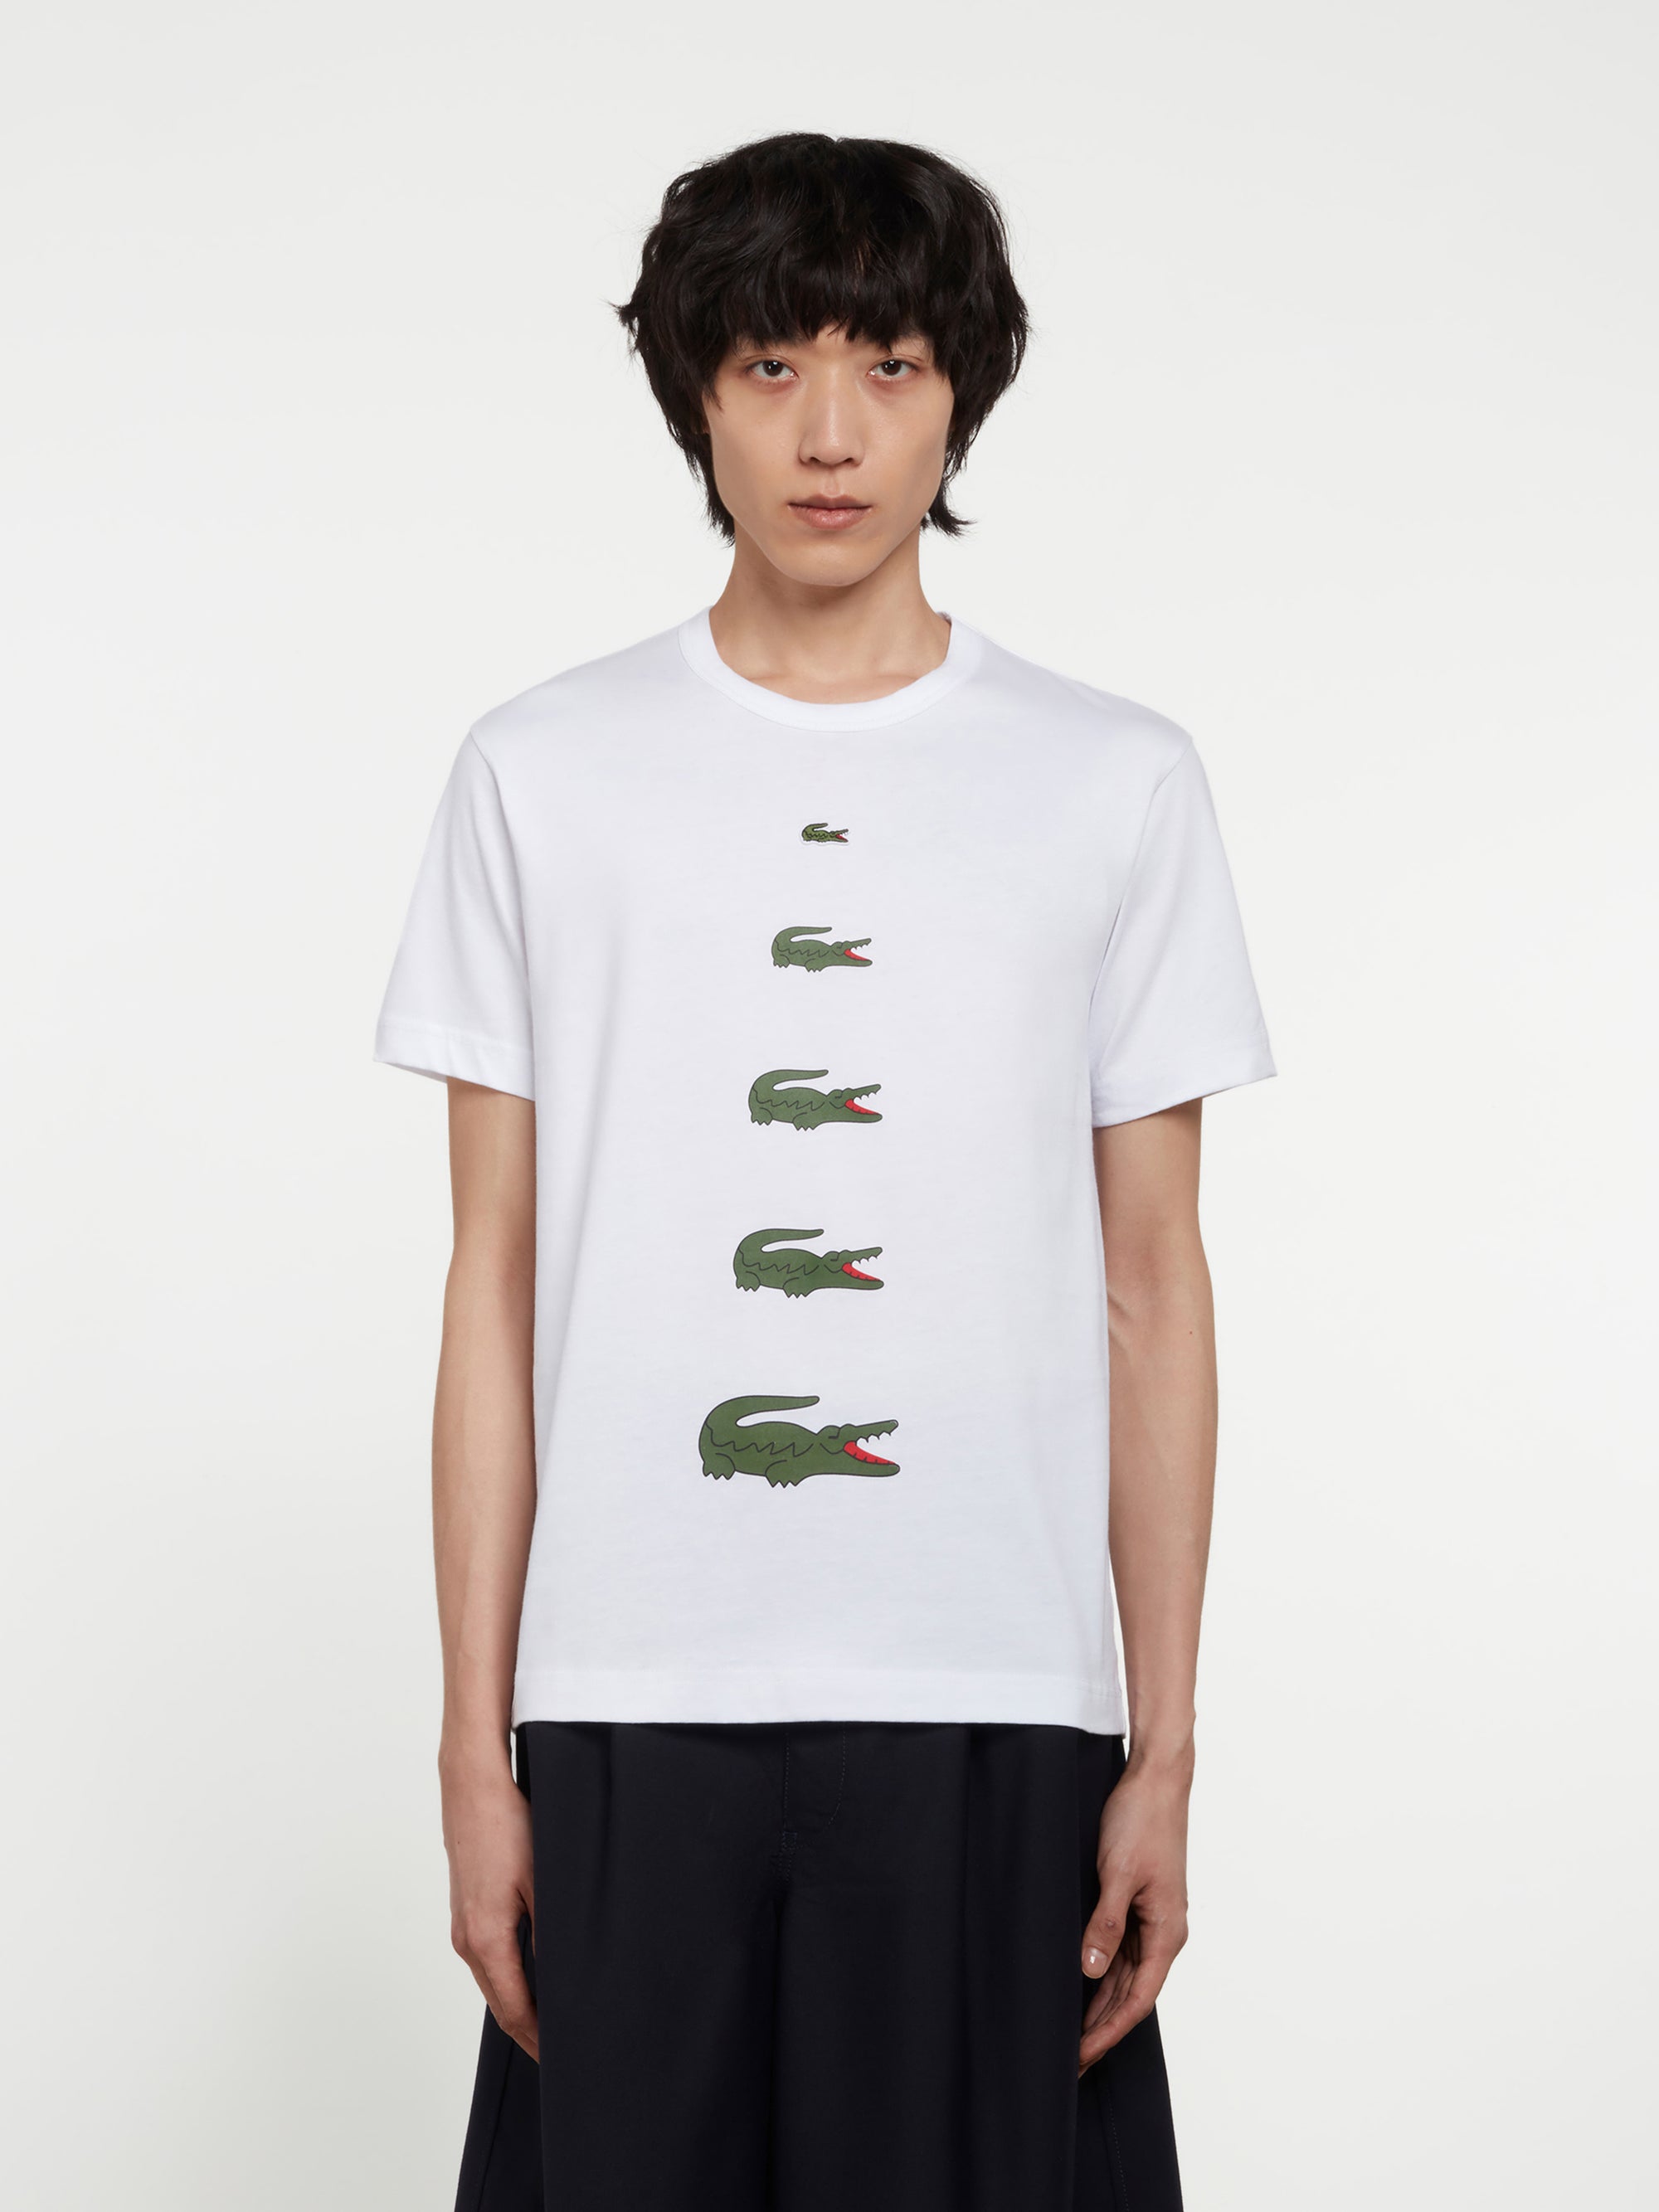 CDG Shirt - Lacoste Men’s Printed T-Shirt - (White) view 1